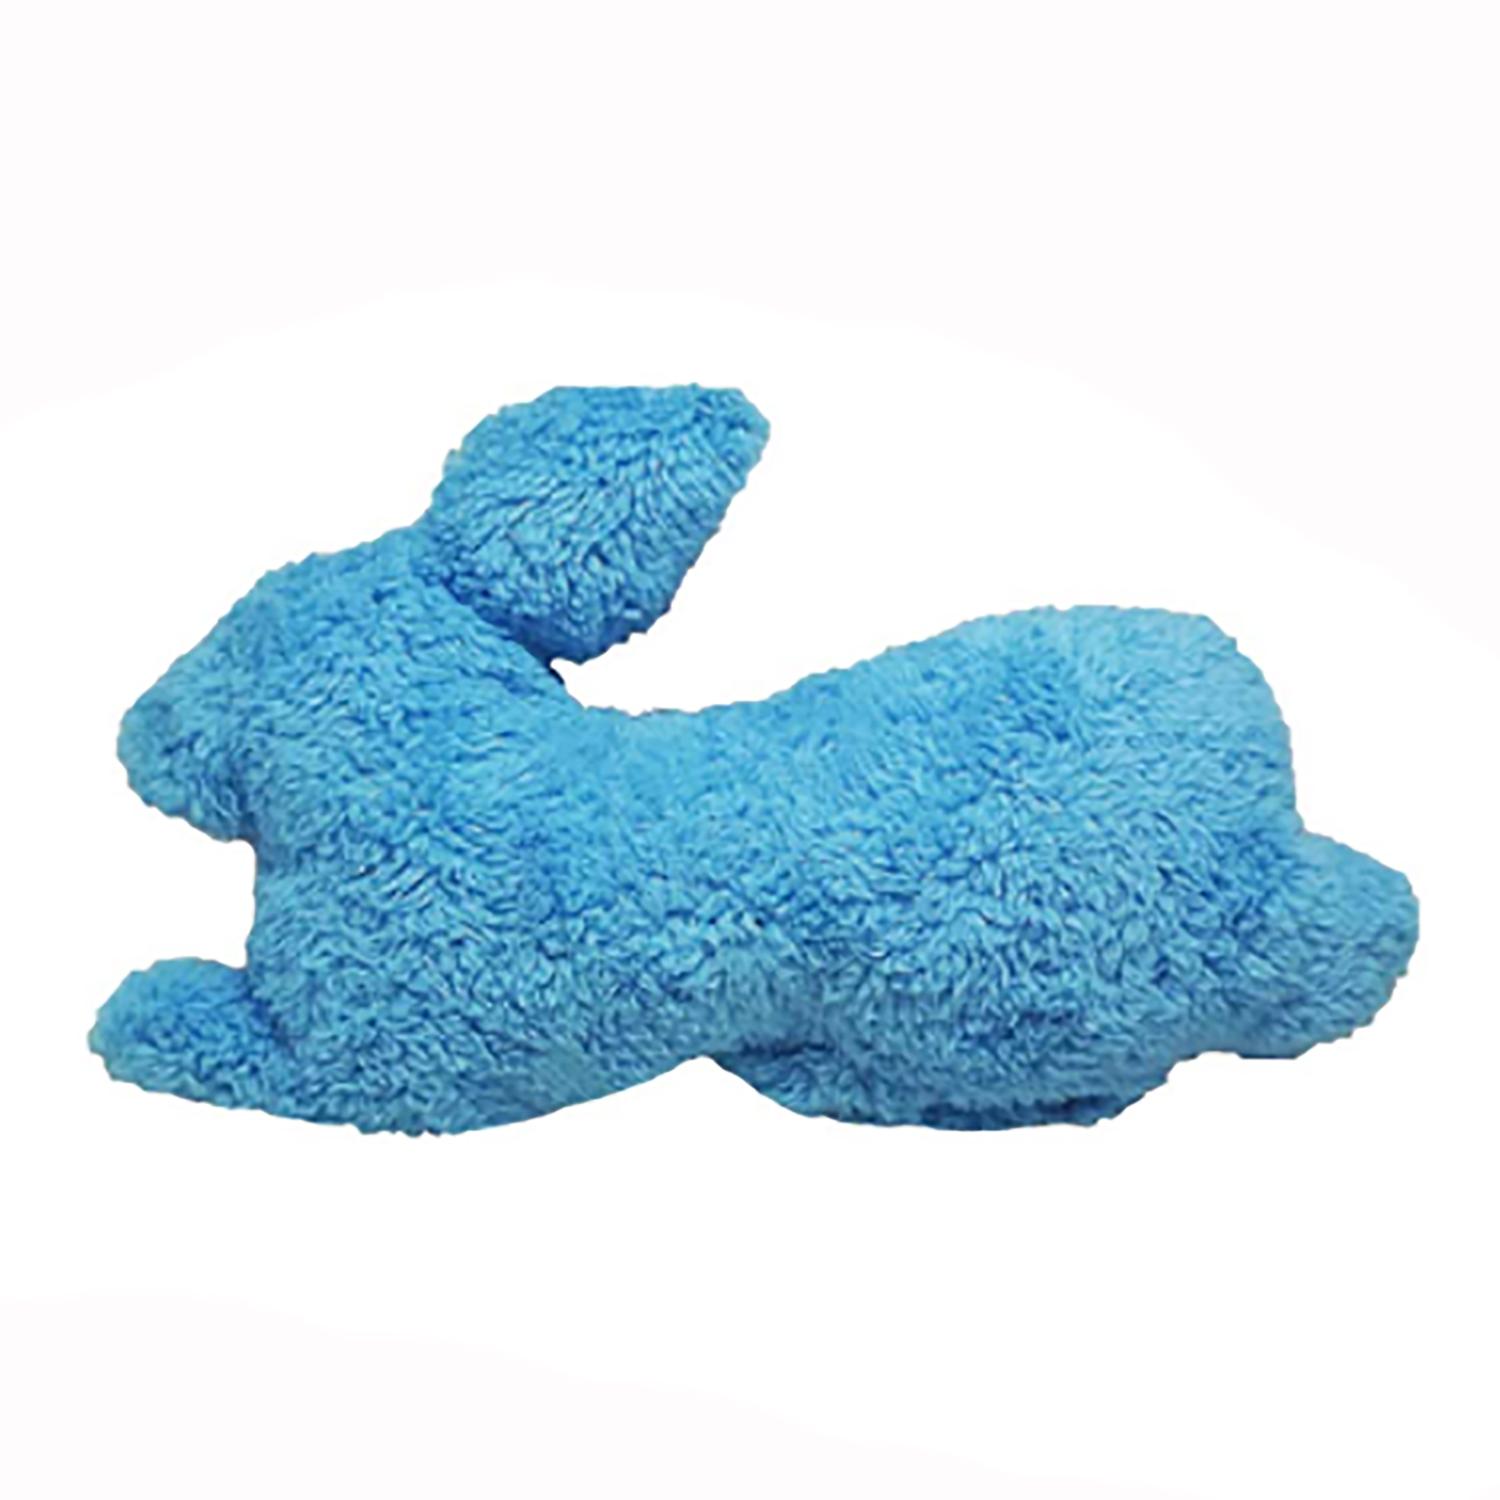 blue bunny soft toy